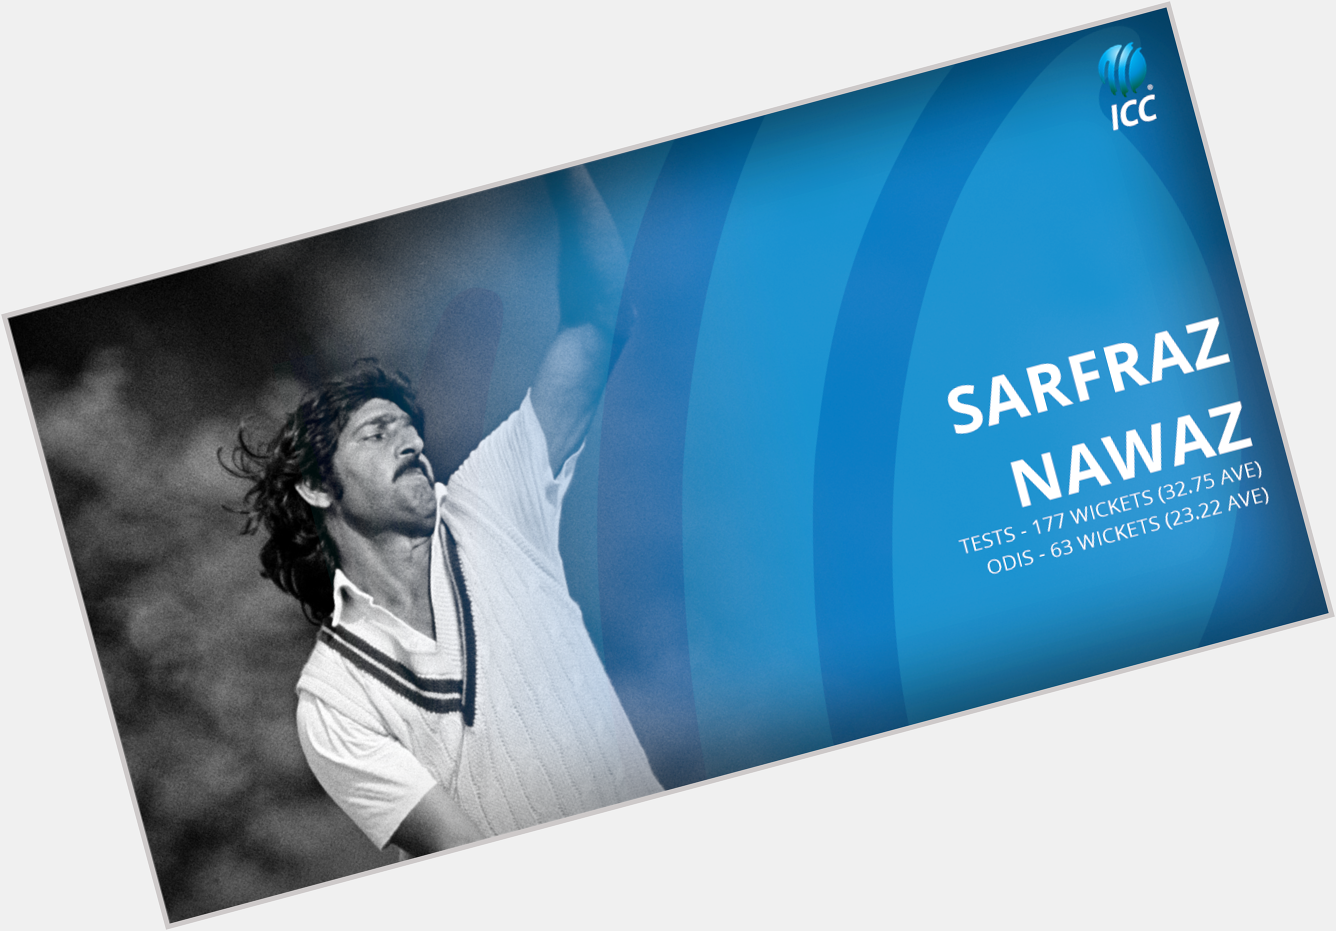 Happy Birthday to Imran Khan\s opening bowling partner, Sarfraz Nawaz 